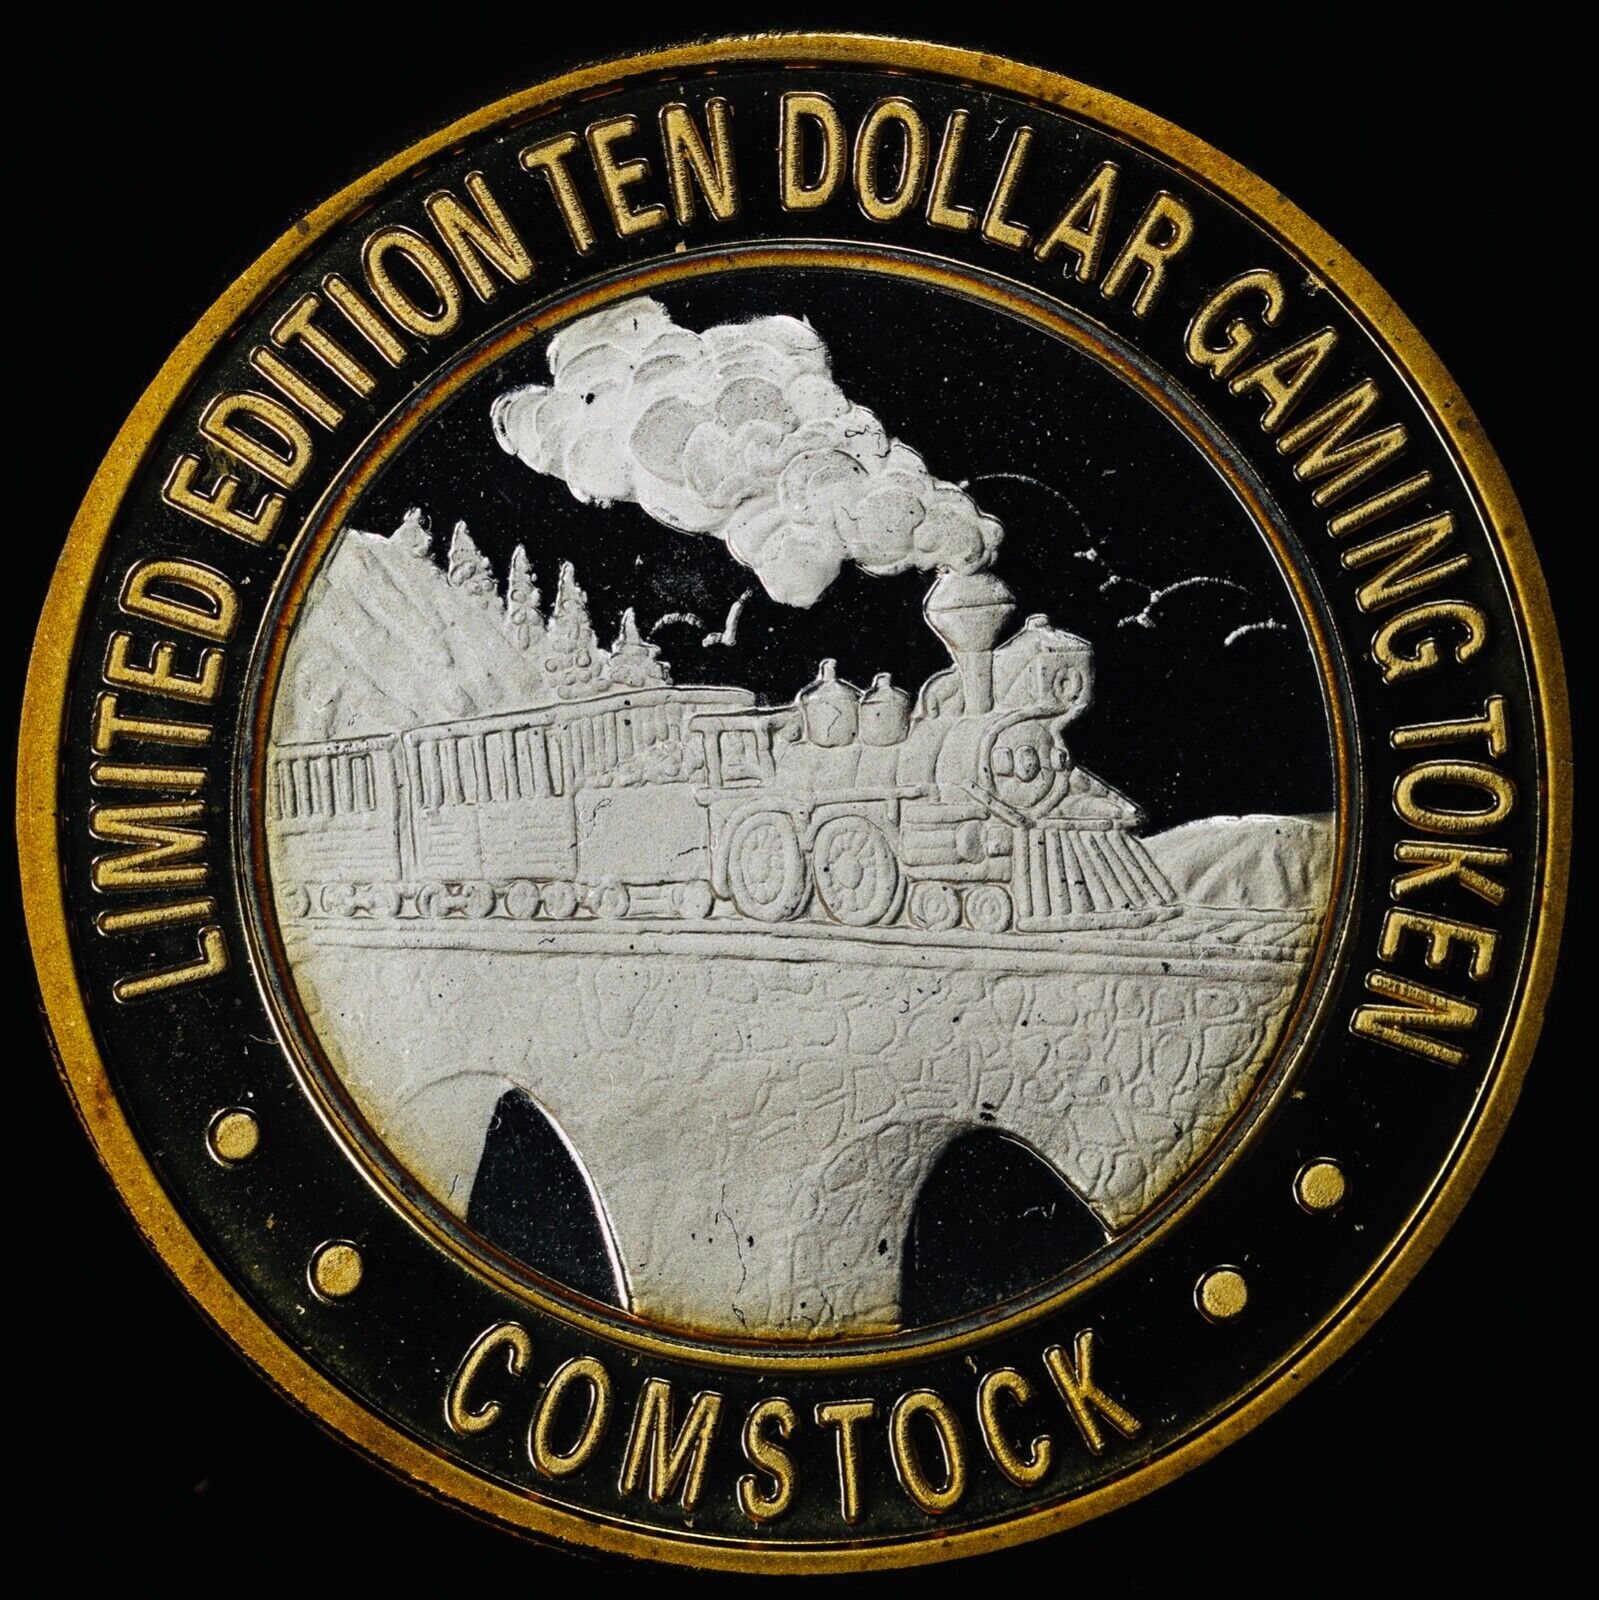 1994 Comstock Reno NV $10 Casino .999 Silver Strike Train / Locomotive on Bridge